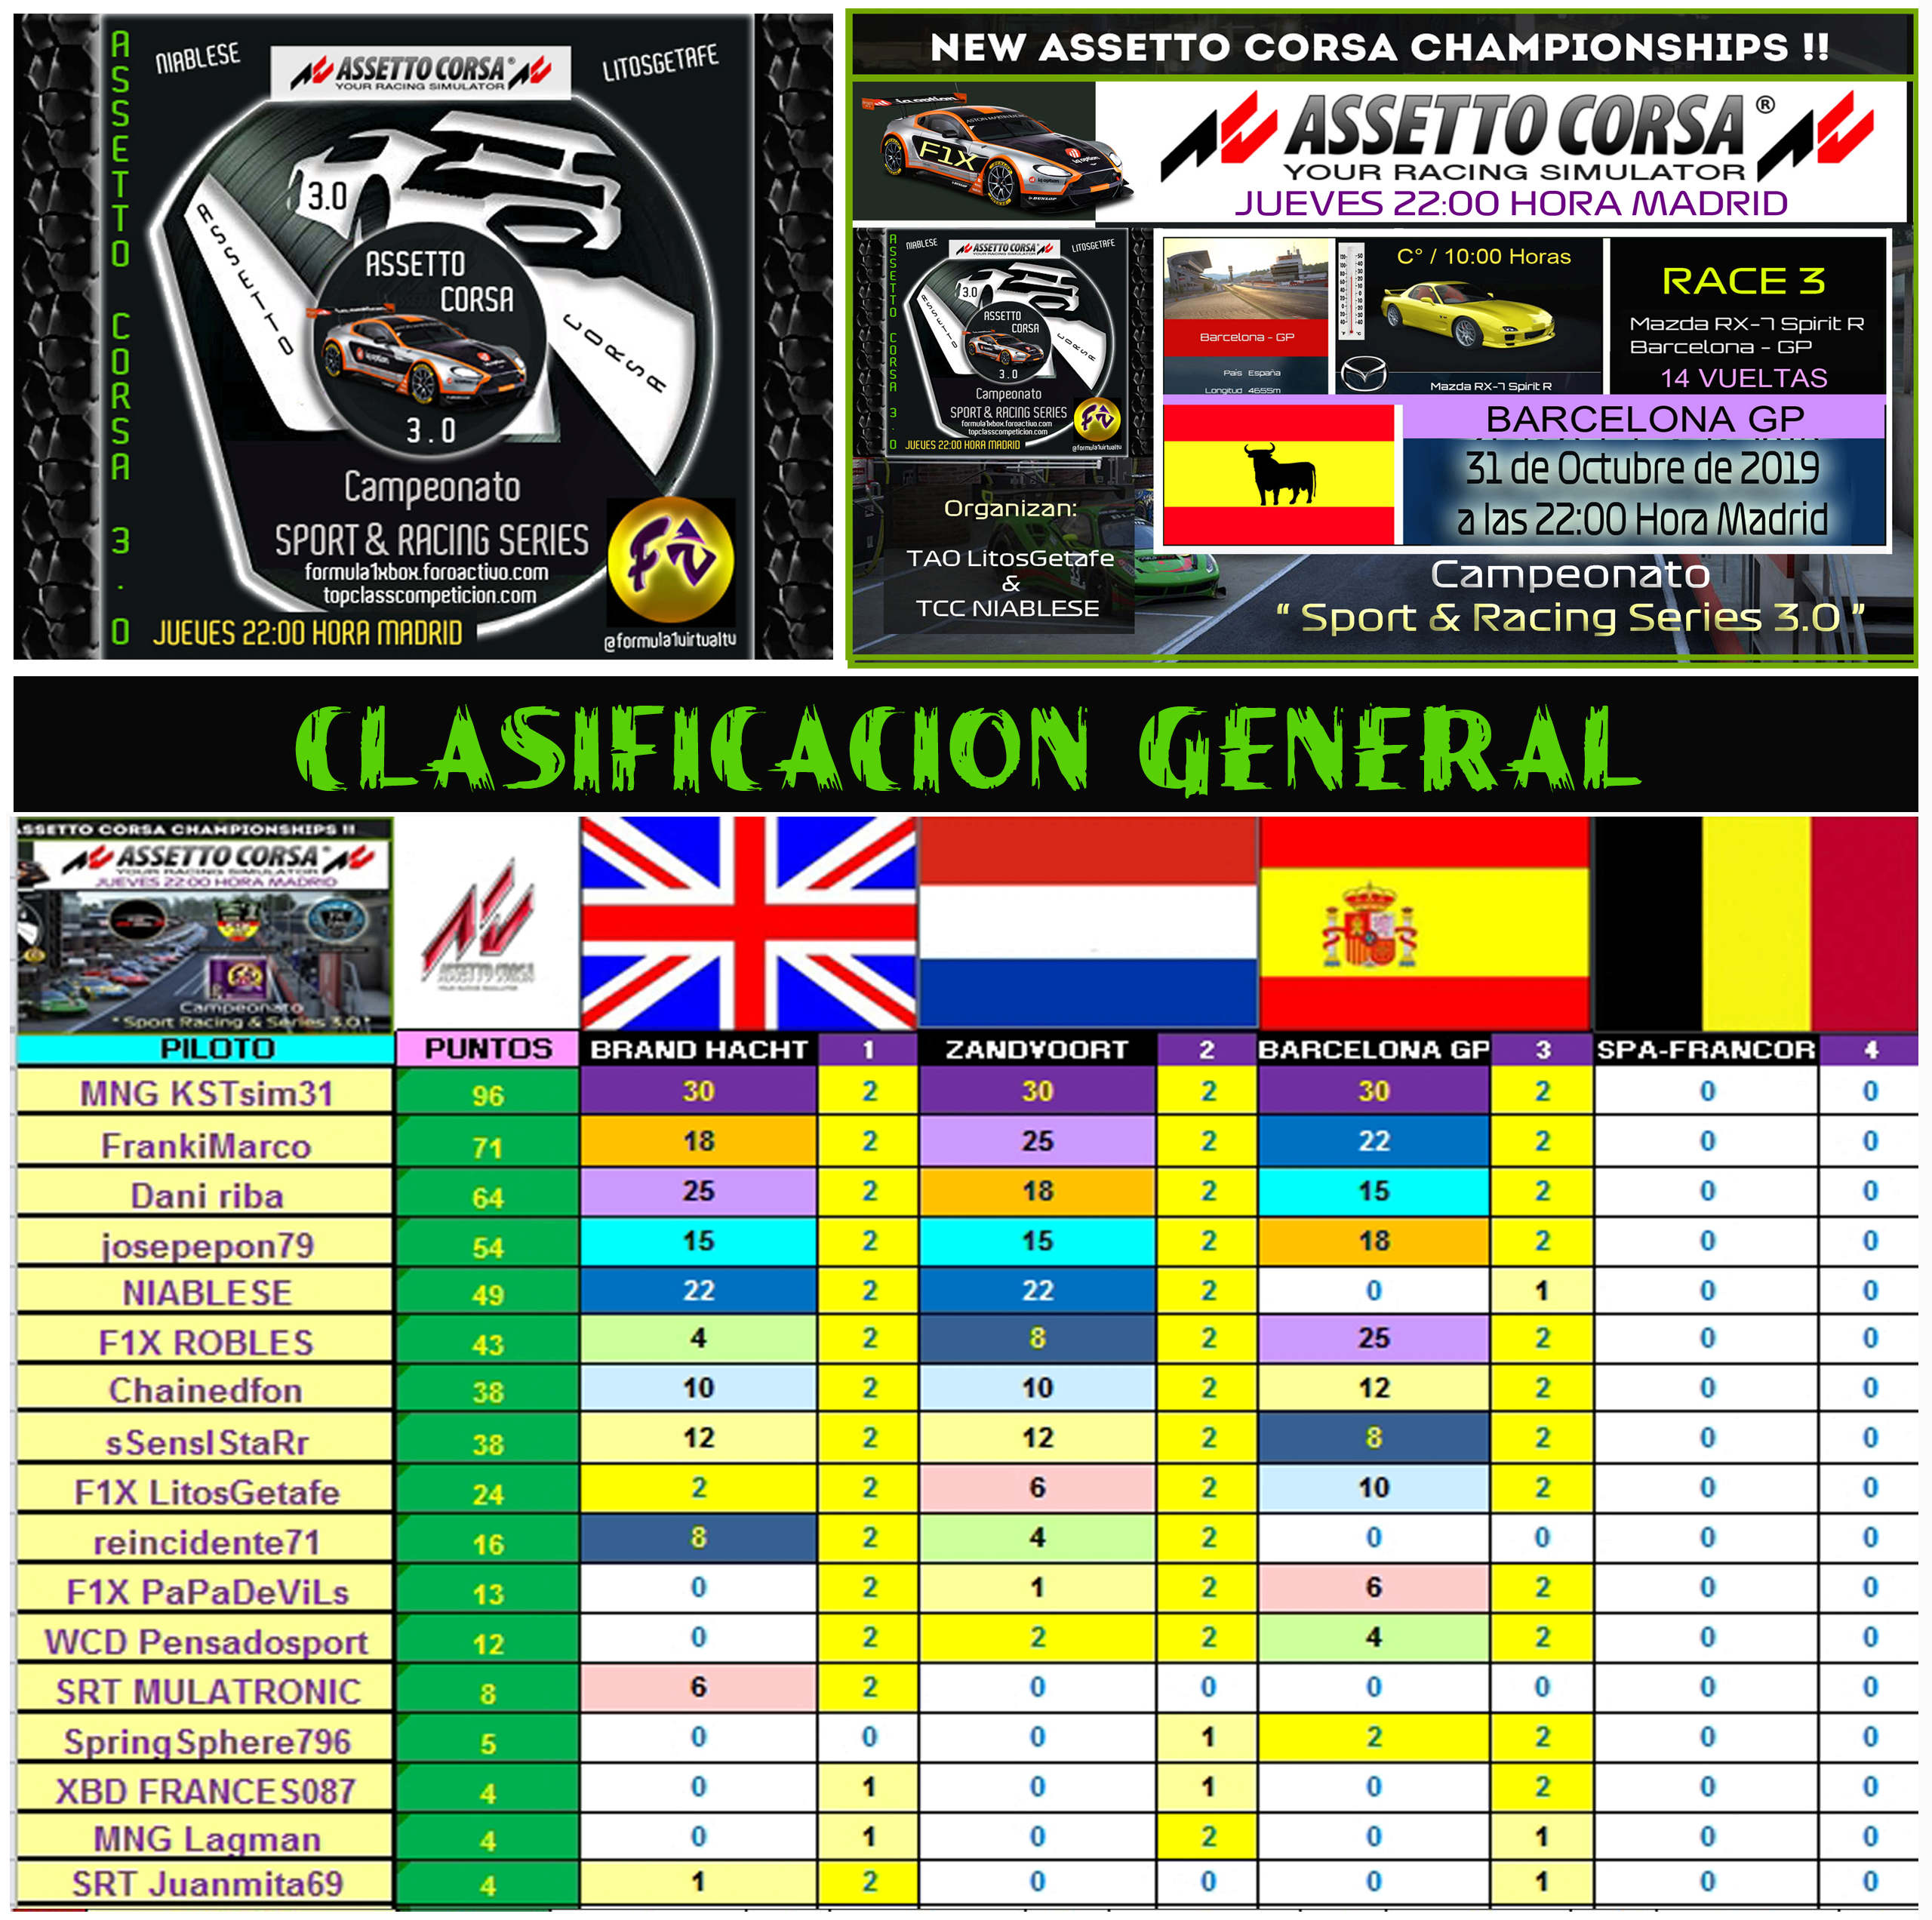 ASSETTO CORSA /// CAMPEONATO SPORT & RACING SERIES 3.0 /// RACE 3 BARCELONA - RESULTADOS + PODIUM + CLASIFICACION GENERAL Clasi_27